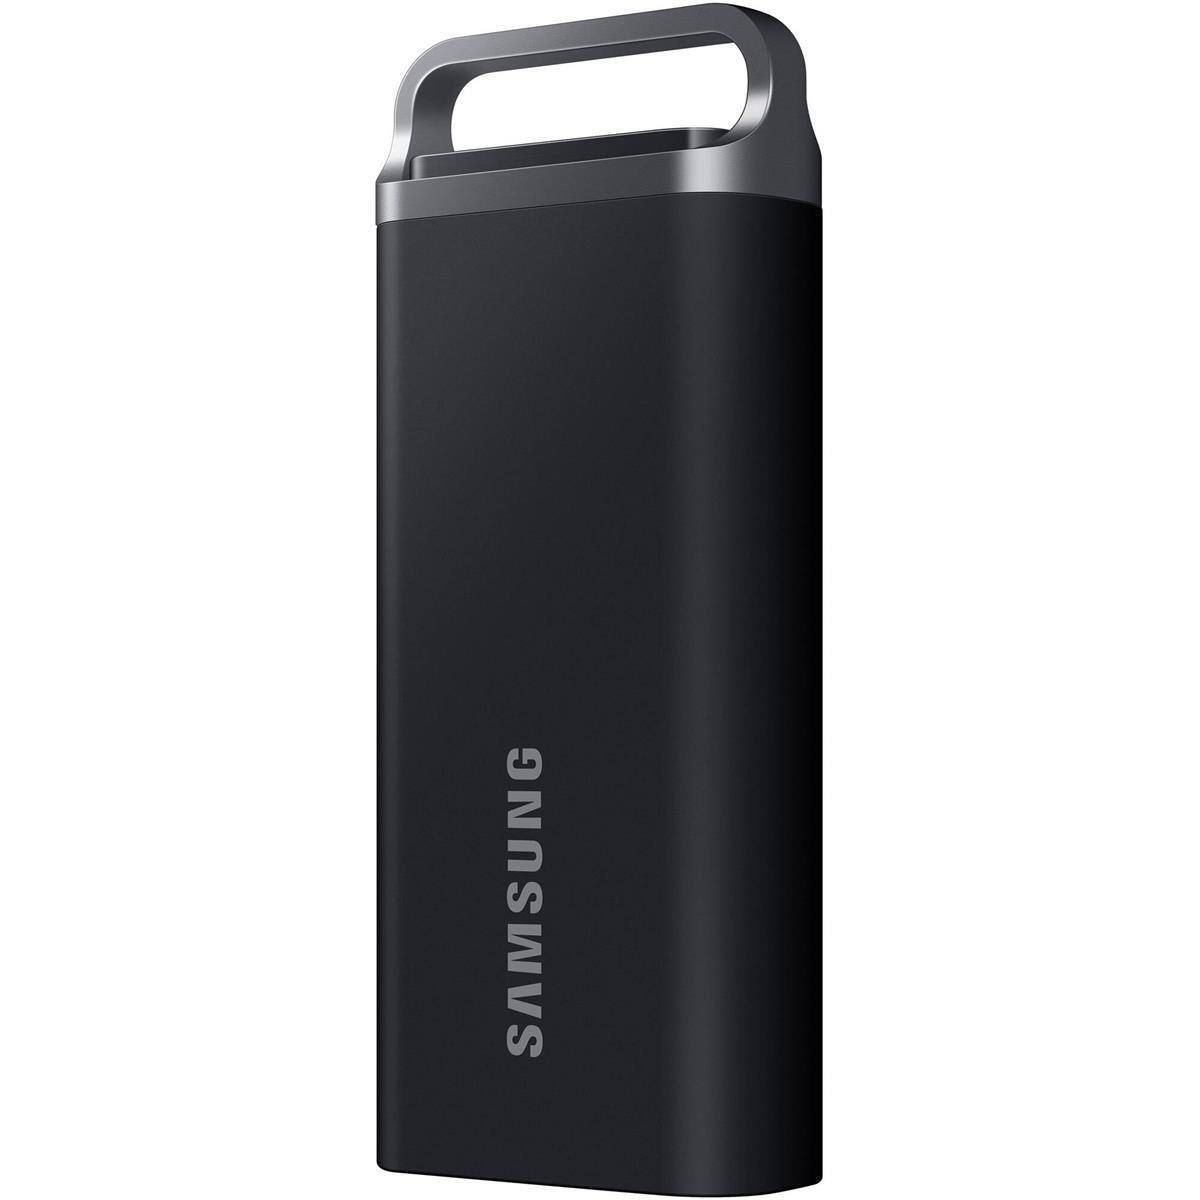 Samsung T5 EVO USB 3.2 Gen 1 Portable External SSD, Black #MU-PH8T0S/AM